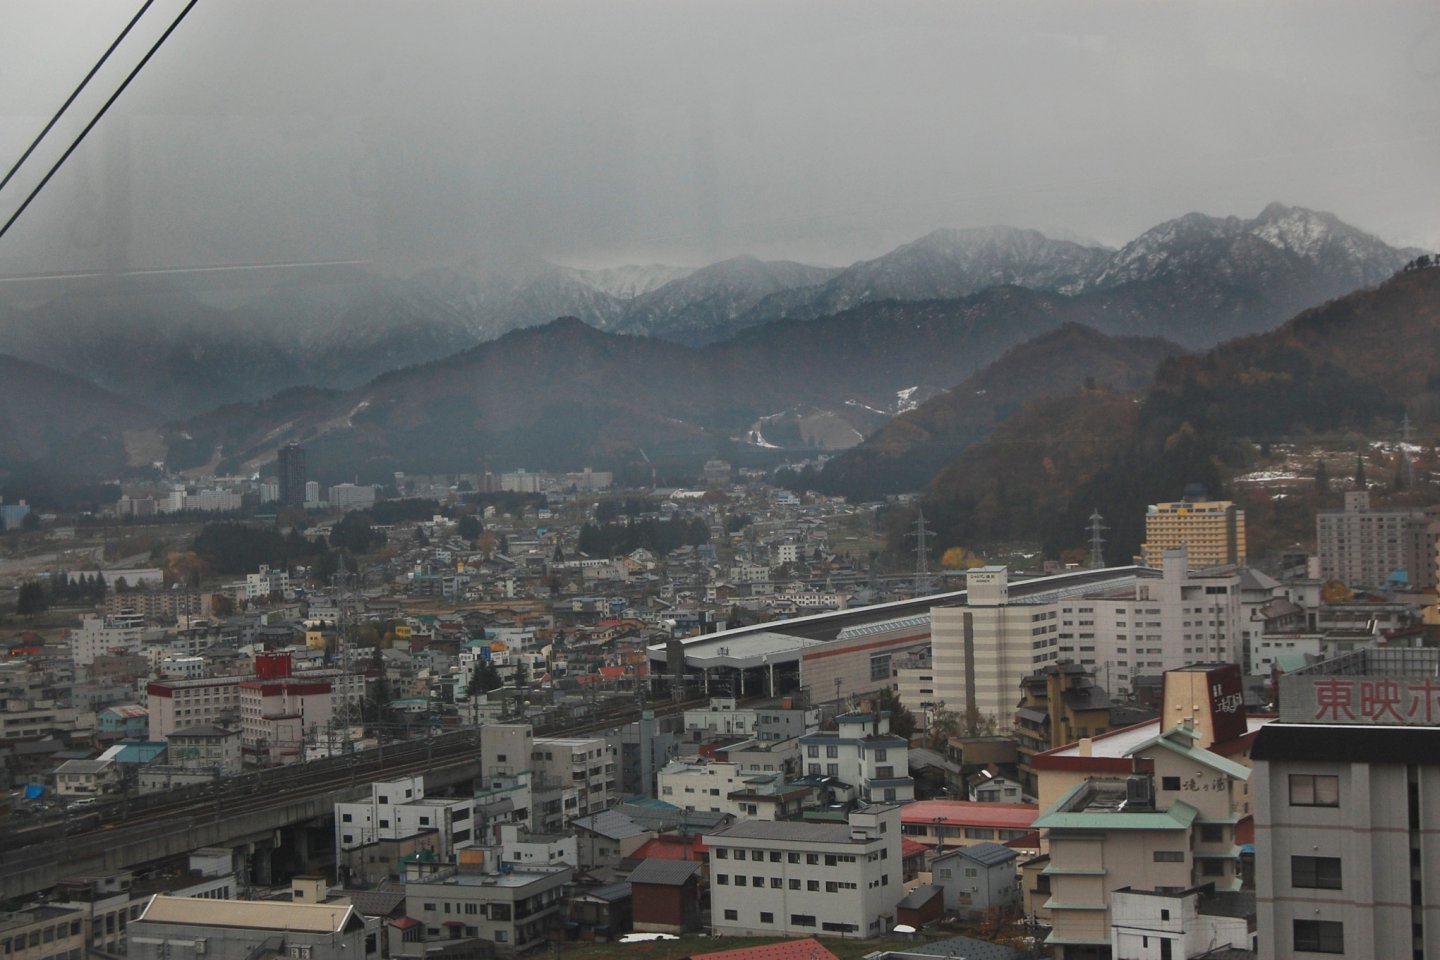 Pemandangan kota Yuzawa dari atas. Terlihat mendung dengan pegunungan bersalju di sekelilingnya.